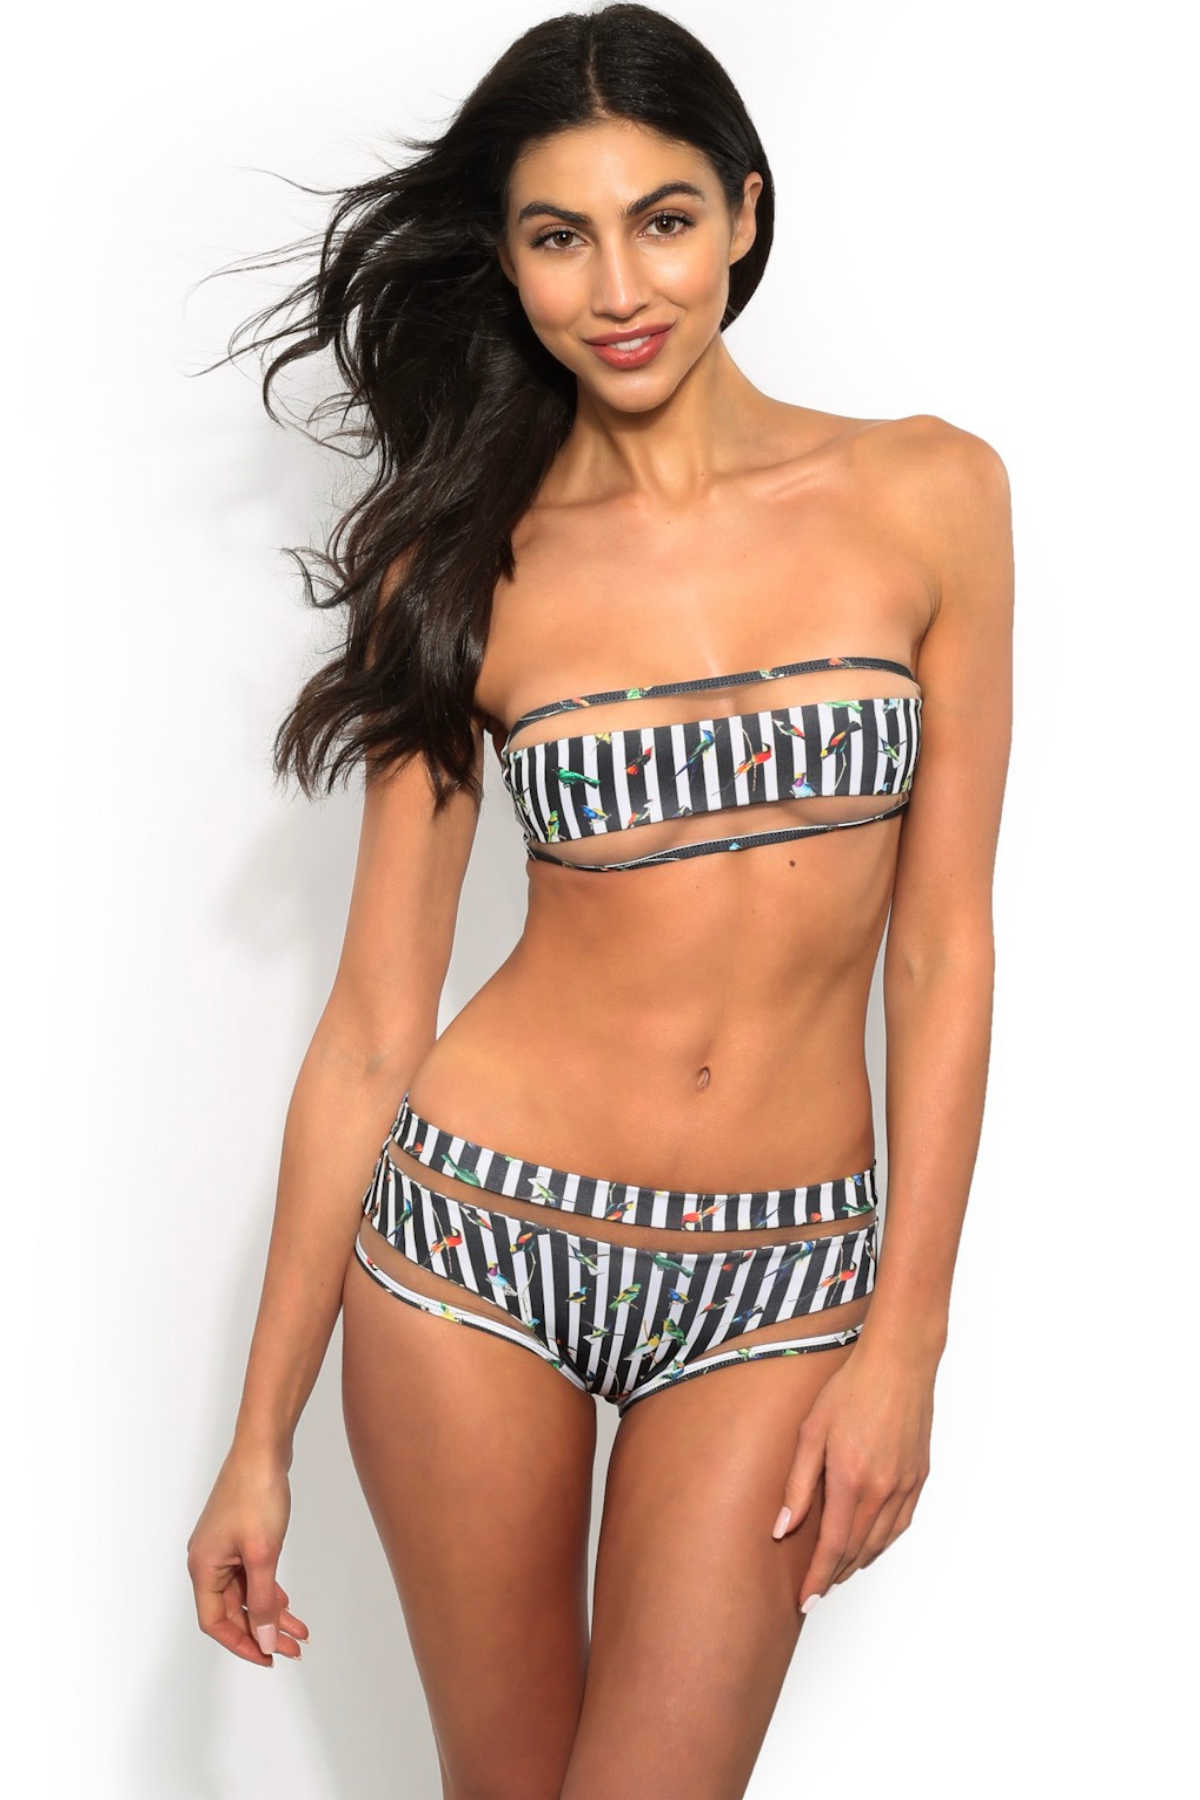 Strapless Bandeau striped bikini top with mesh